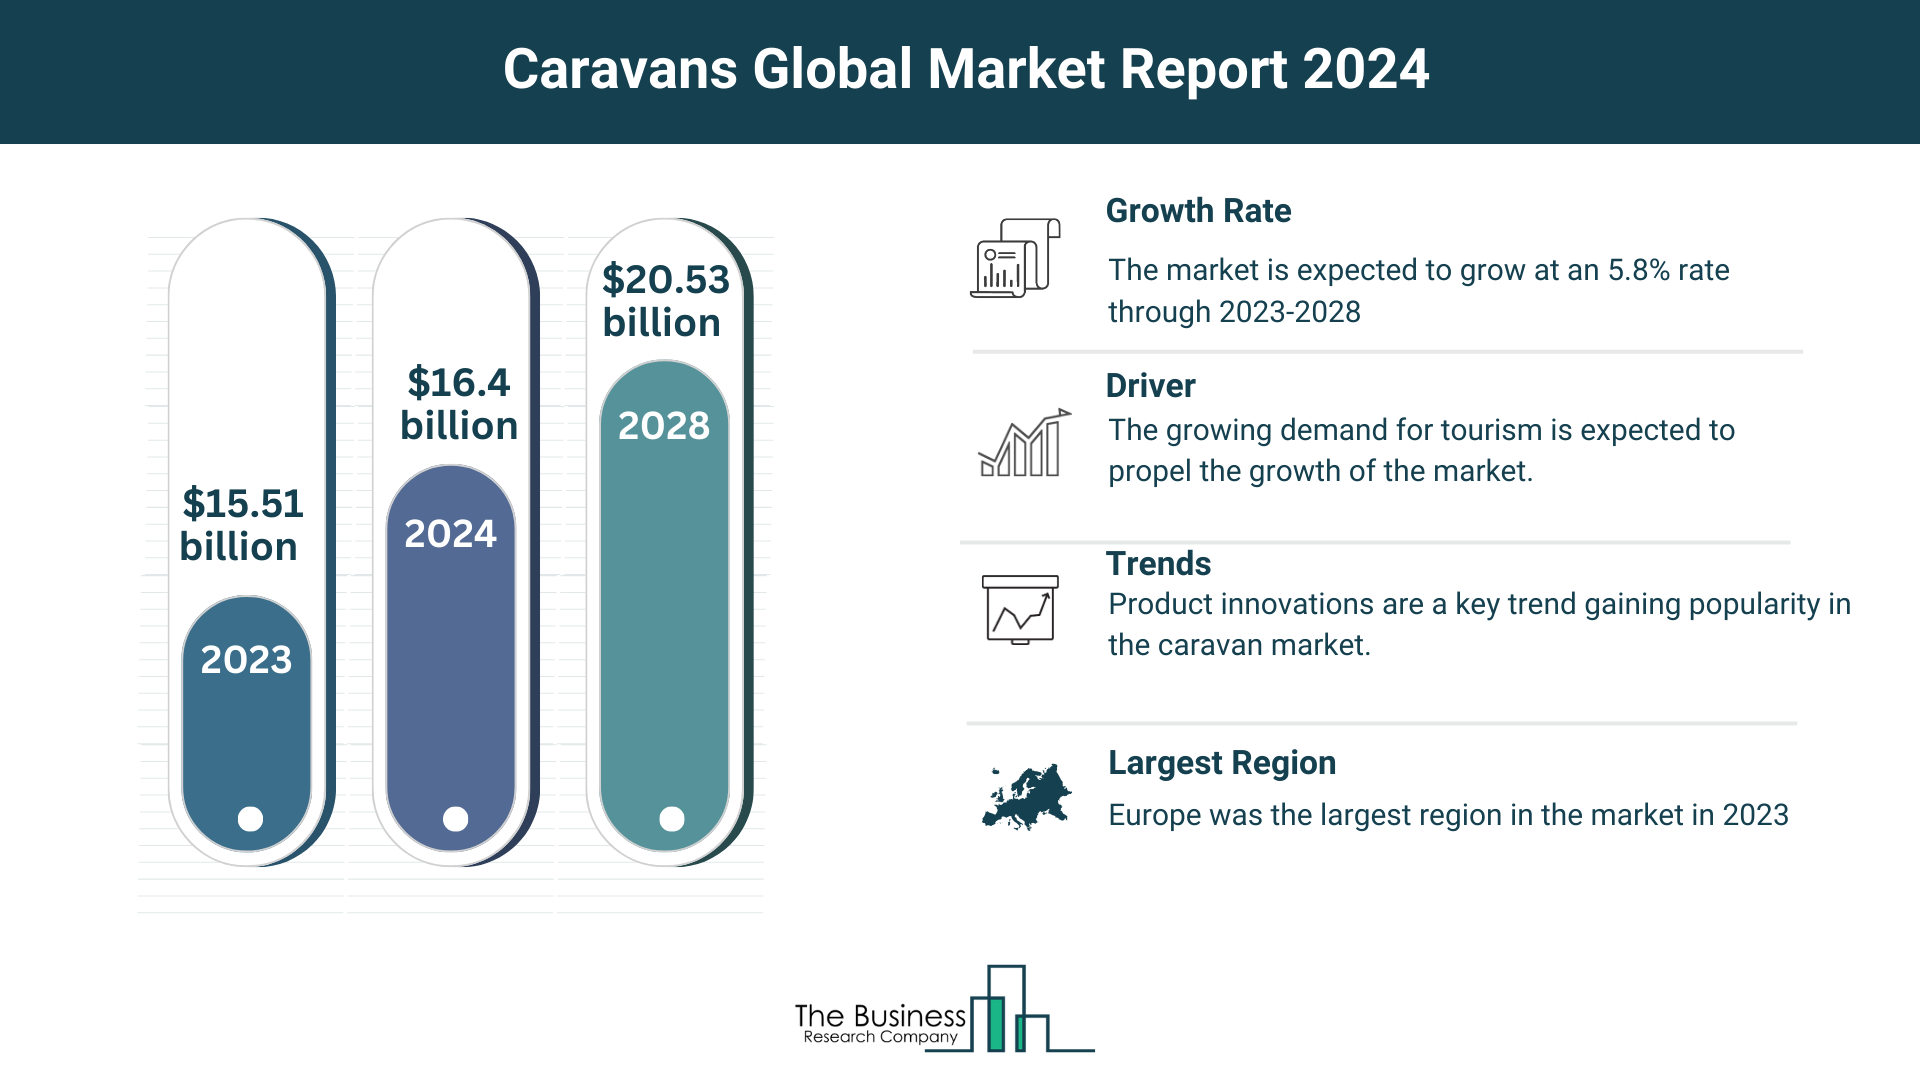 Global Caravans Market